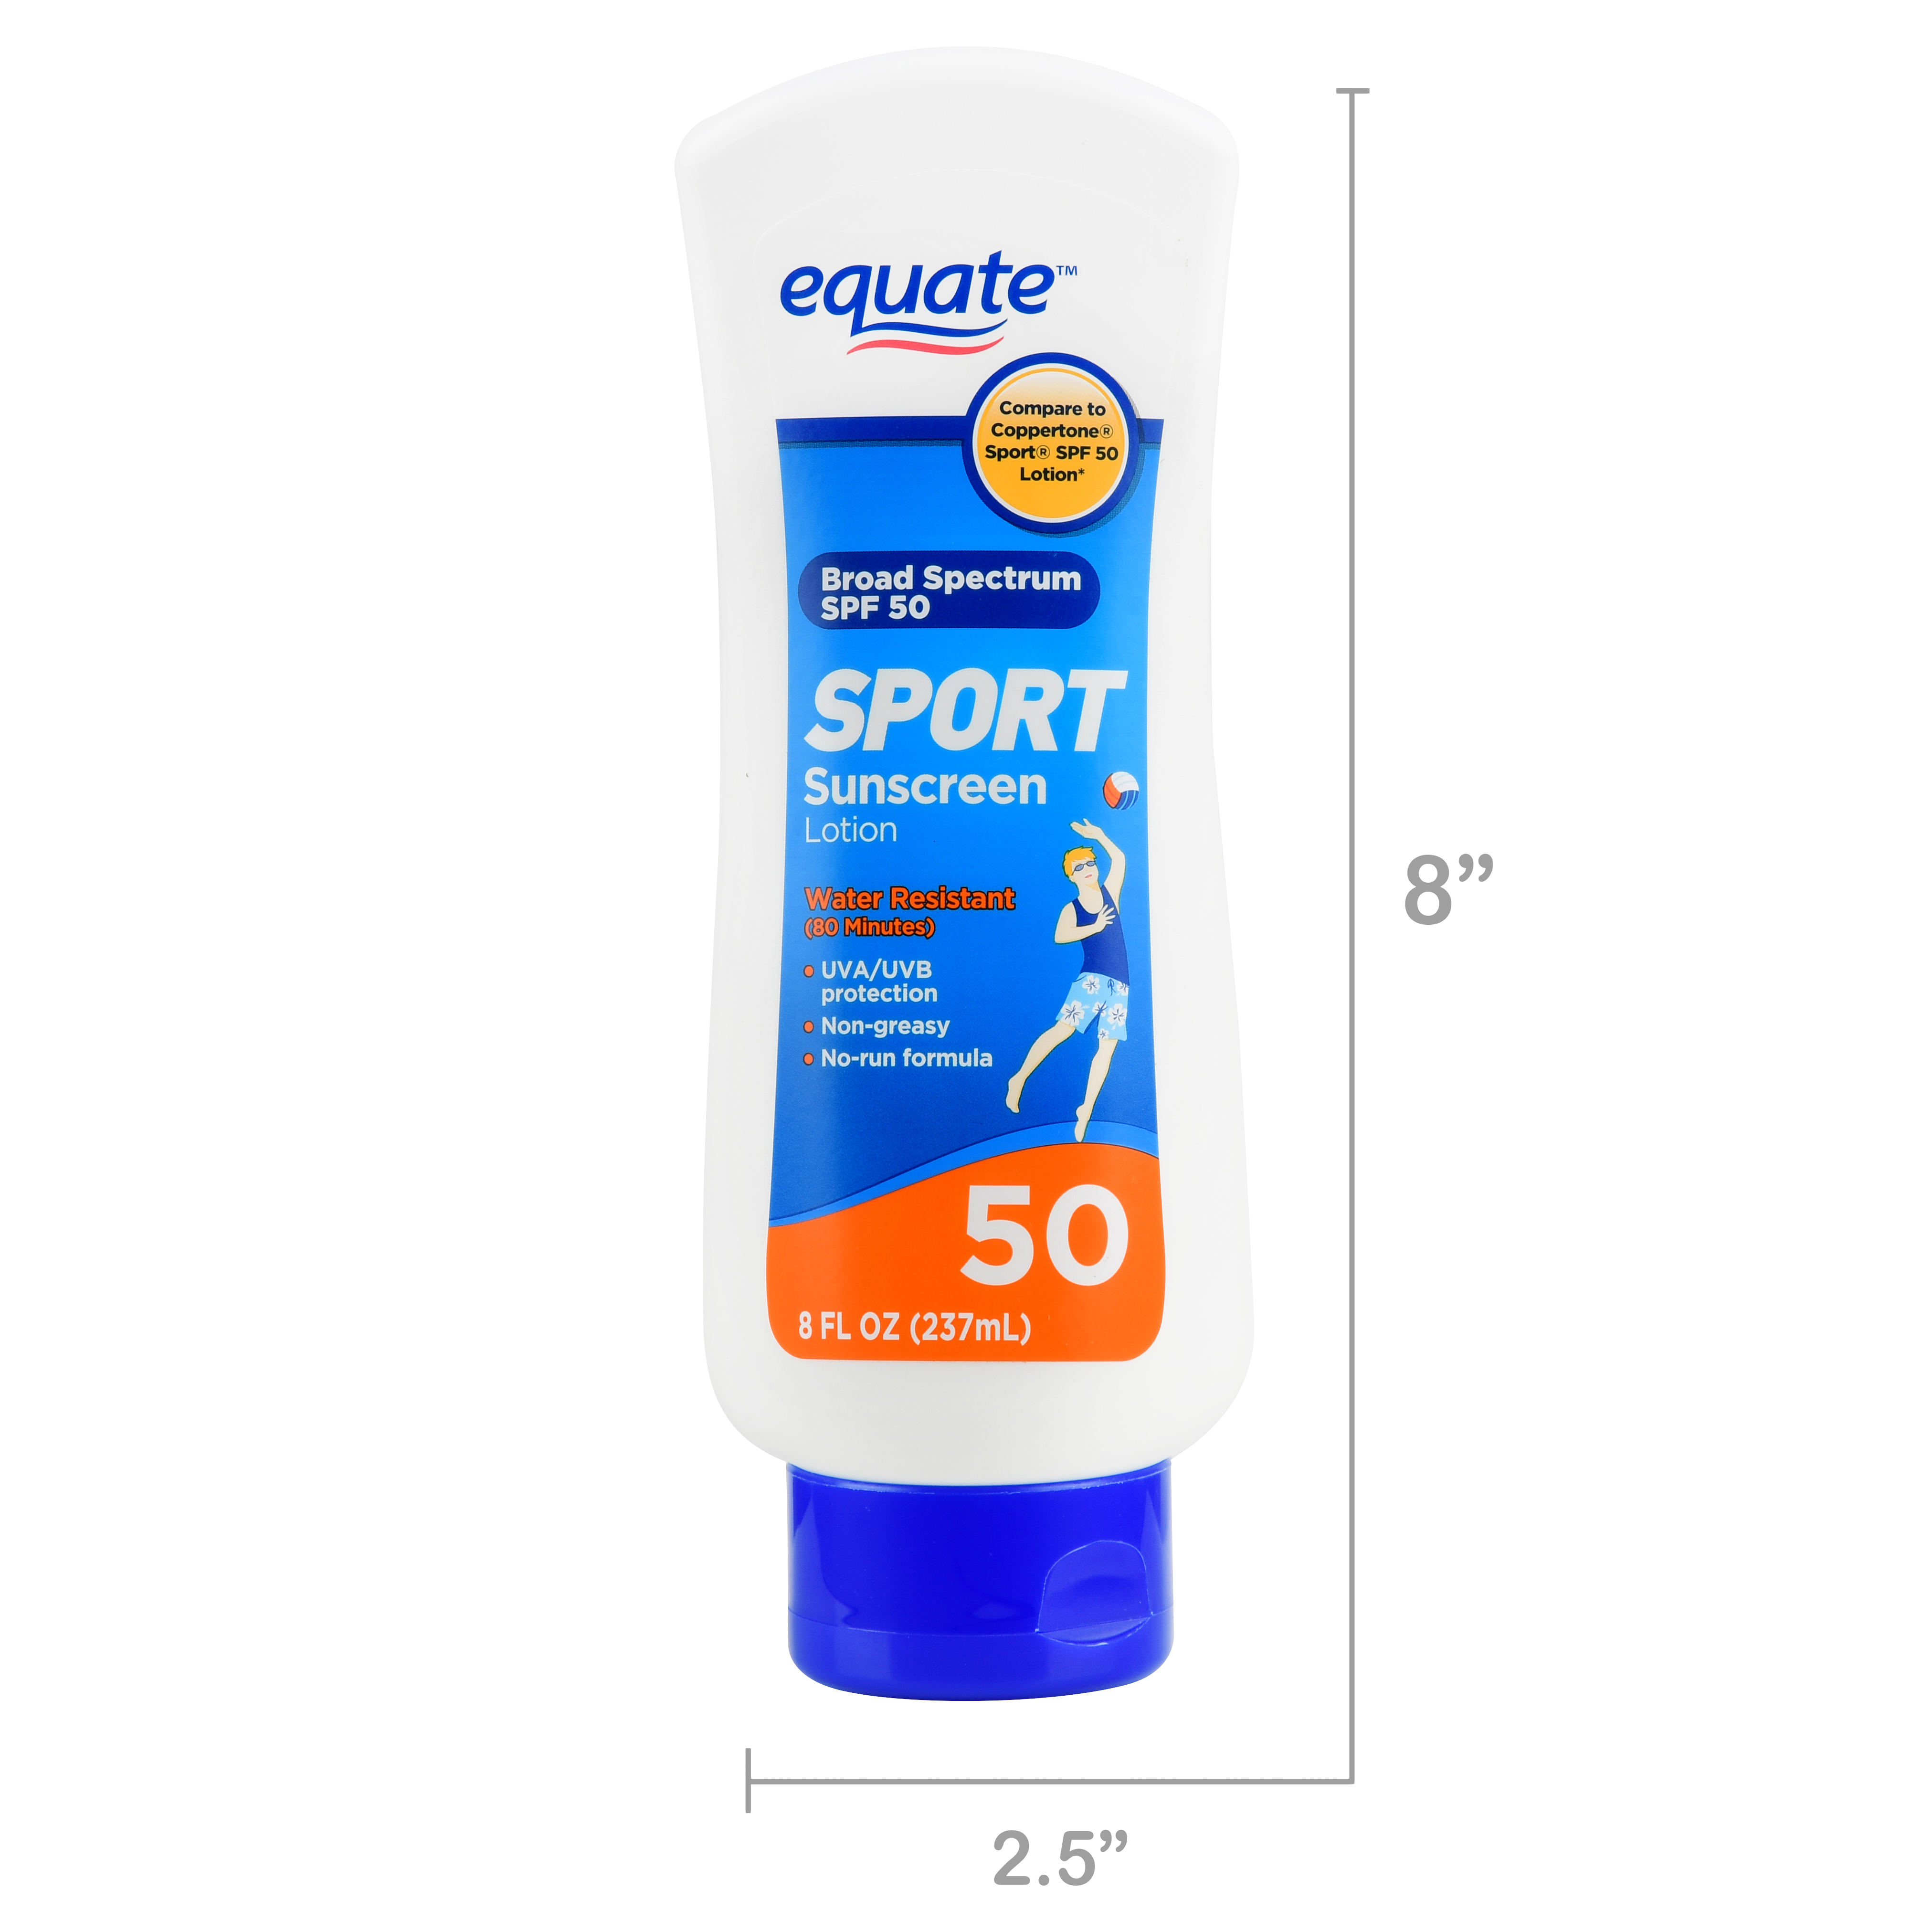 Equate Sport Sunscreen Lotion, SPF 50, 8 fl oz - image 5 of 8